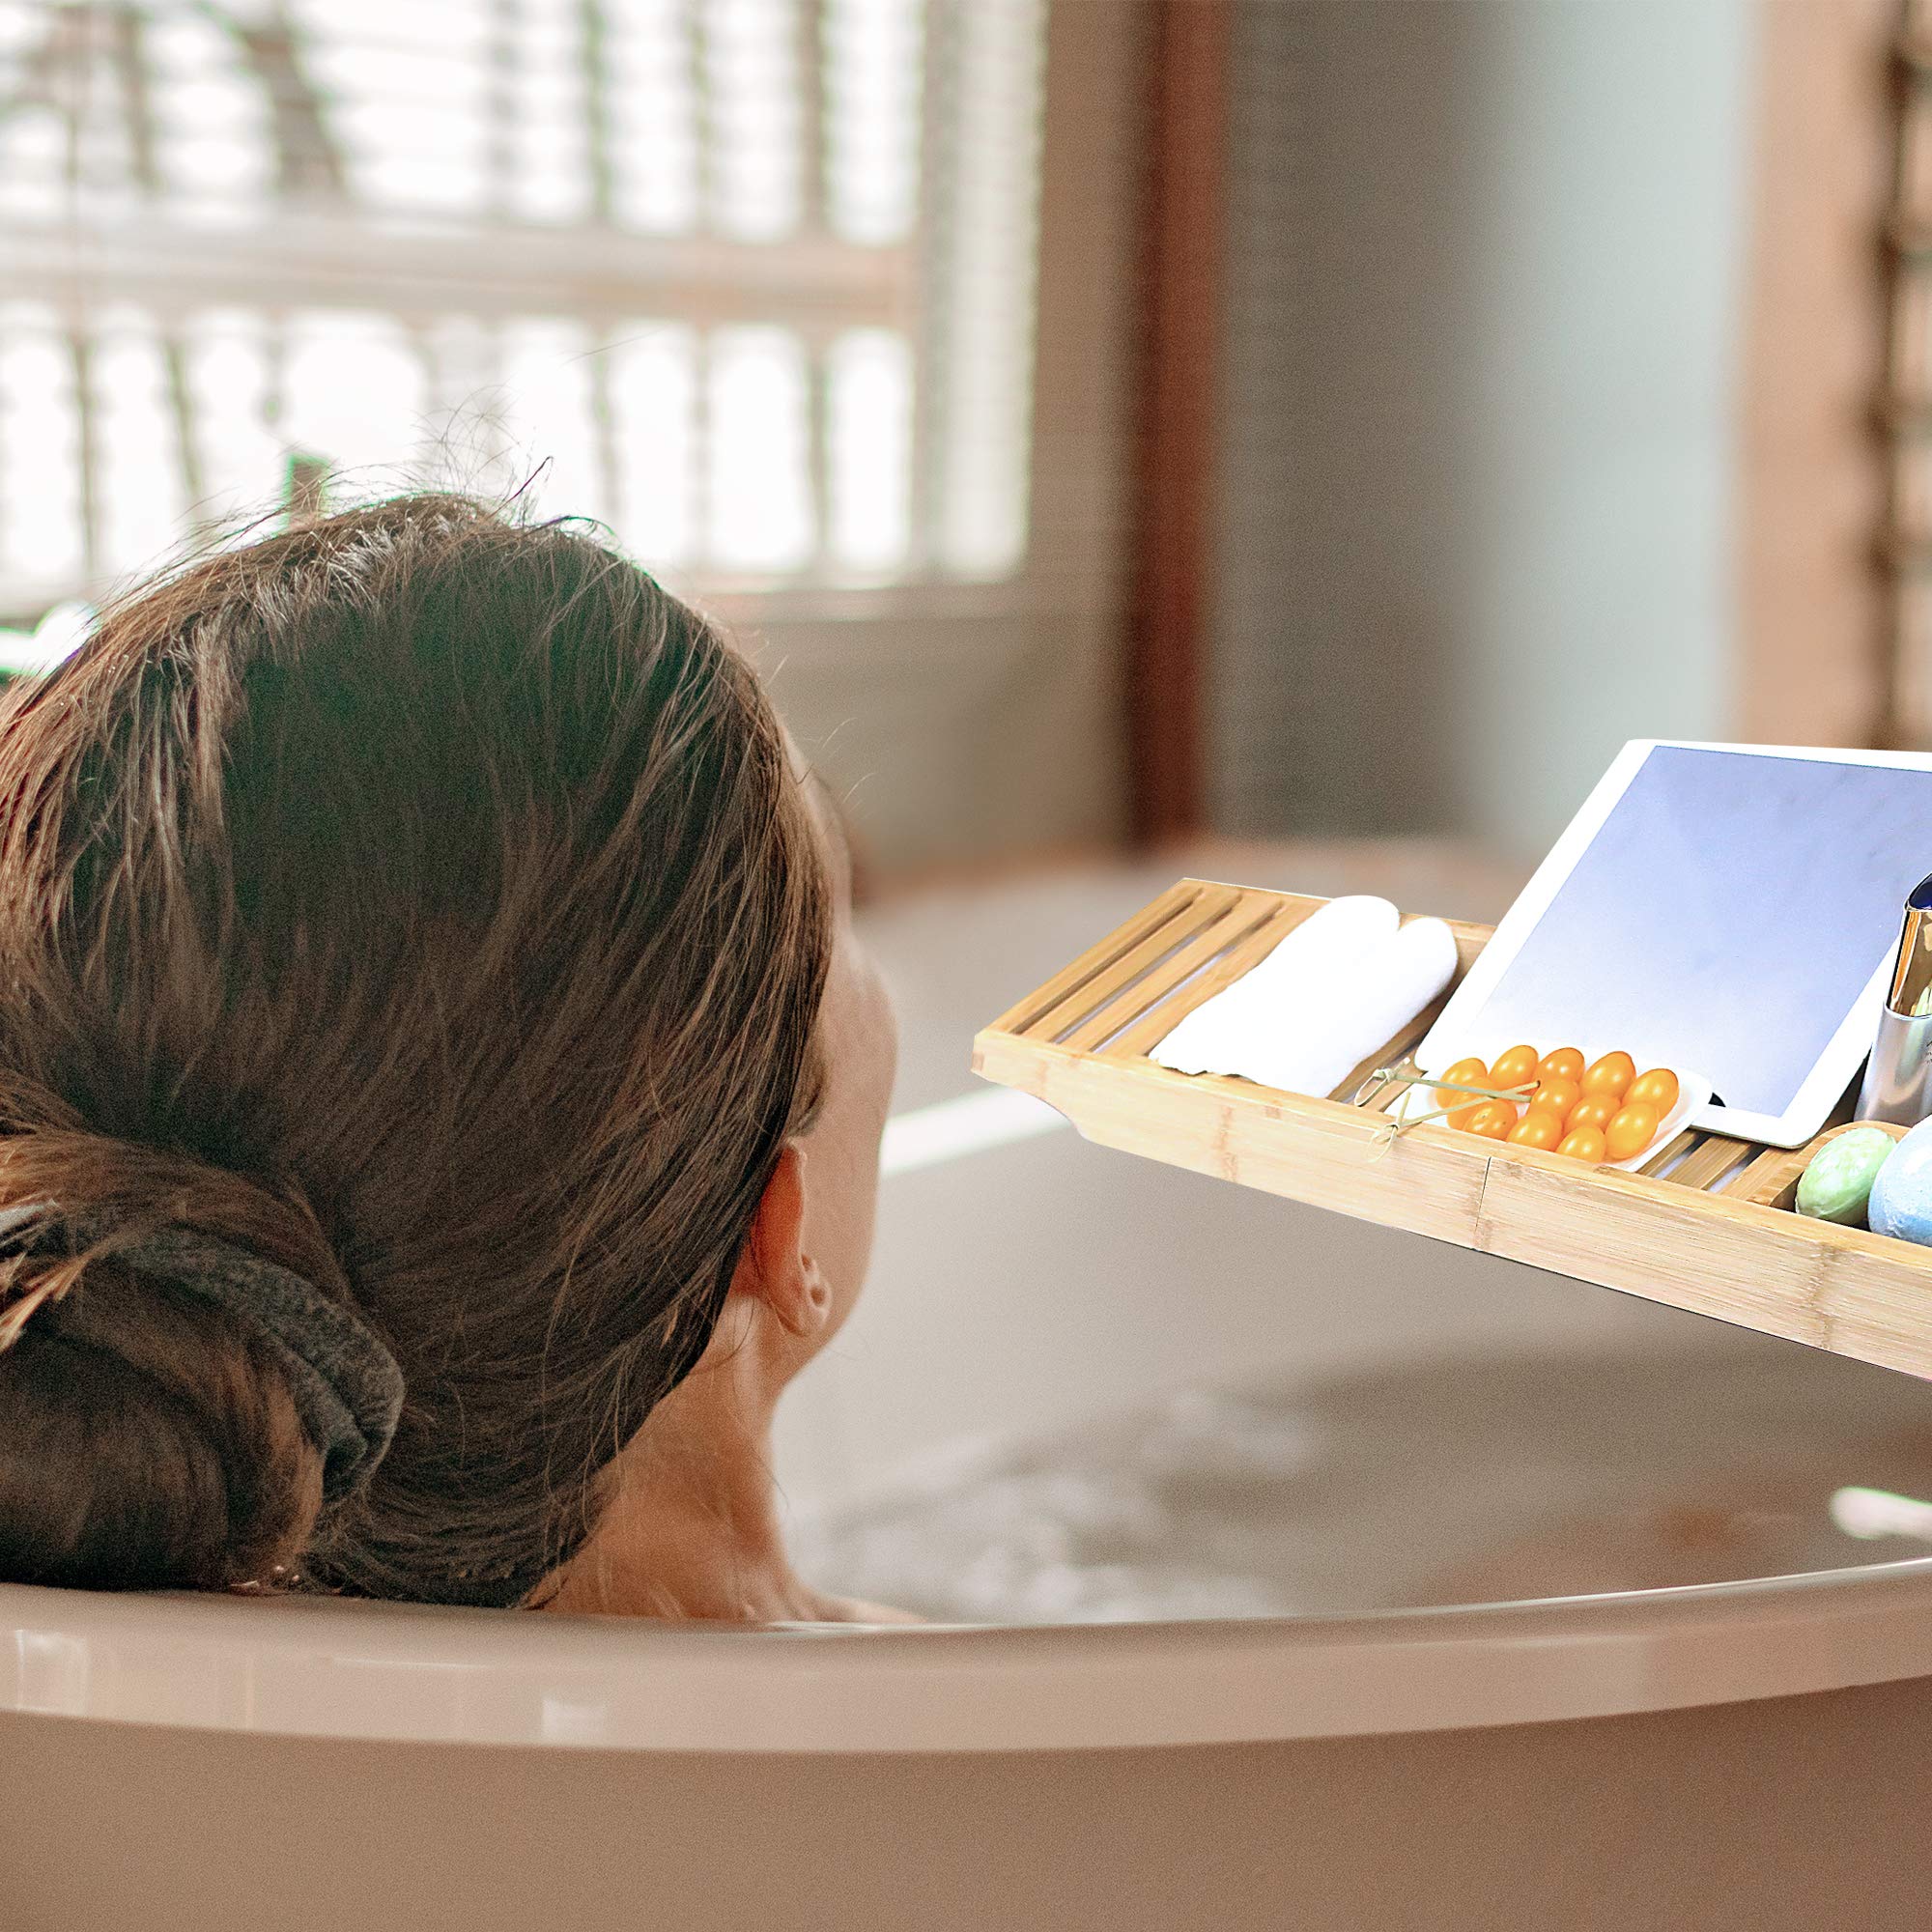 Cabot & Carlyle Luxury Bath Caddy Tray for Tub | Bath Table | Premium Bamboo Bathtub Tray for Tub | Fits All Bath Accessories Wine Glass, Books, Tablets, Cellphones, Shampoo | Bath Shelf Foldable.